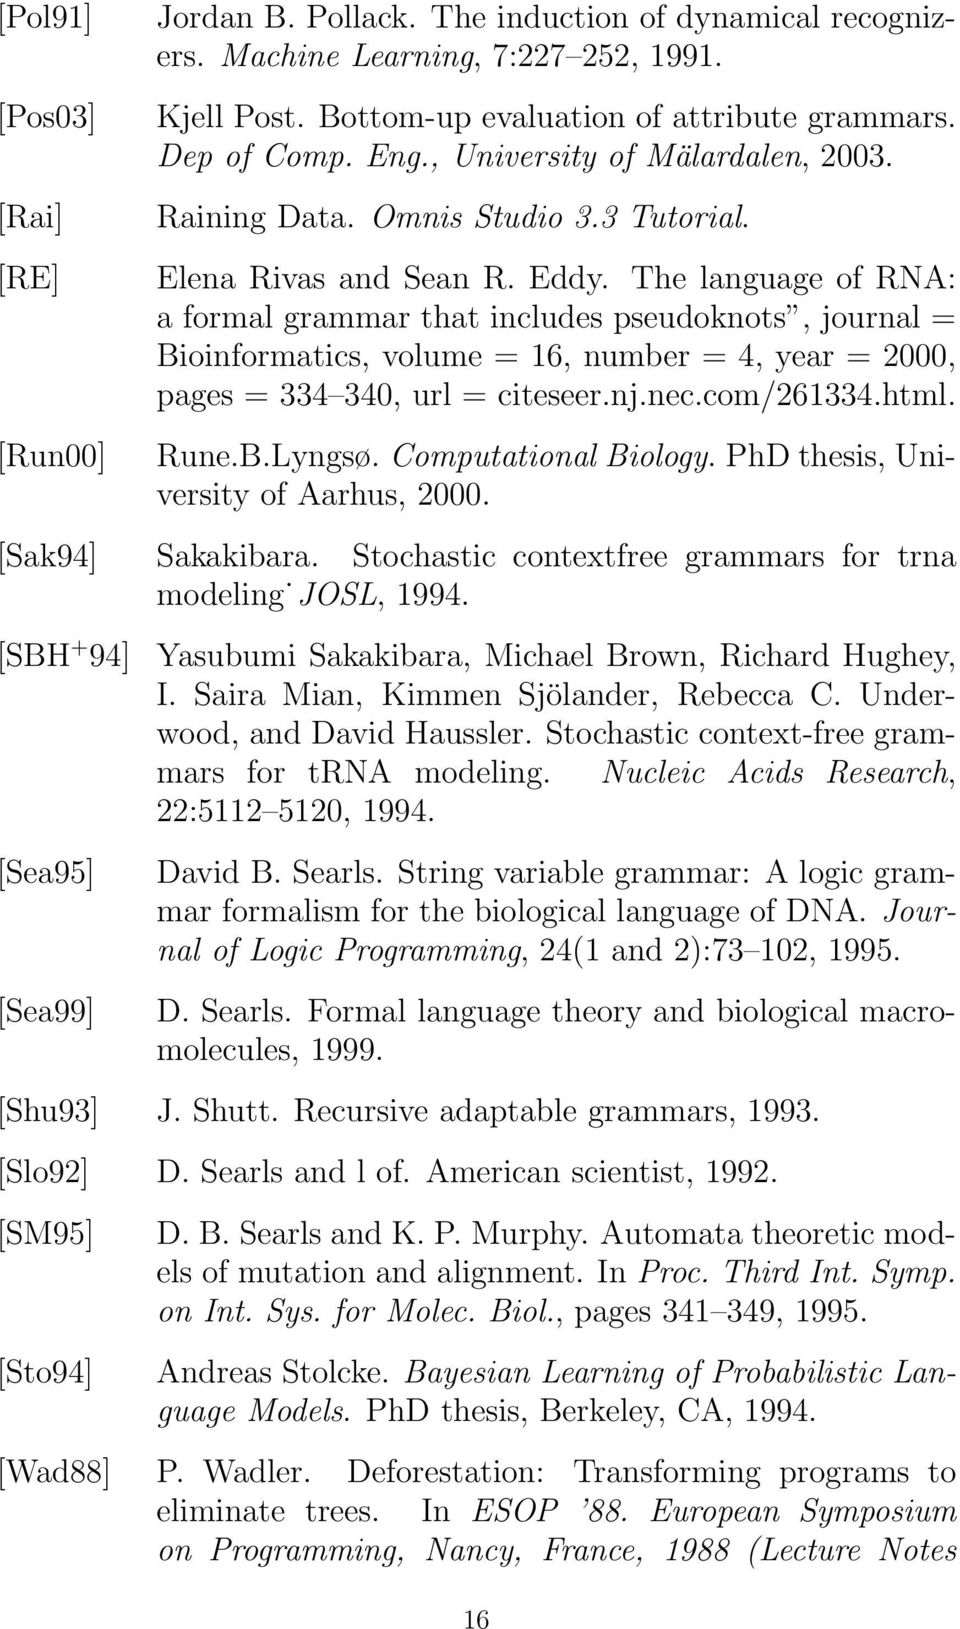 The language of RNA: a formal grammar that includes pseudoknots, journal = Bioinformatics, volume = 16, number = 4, year = 2000, pages = 334 340, url = citeseer.nj.nec.com/261334.html. Rune.B.Lyngsø.